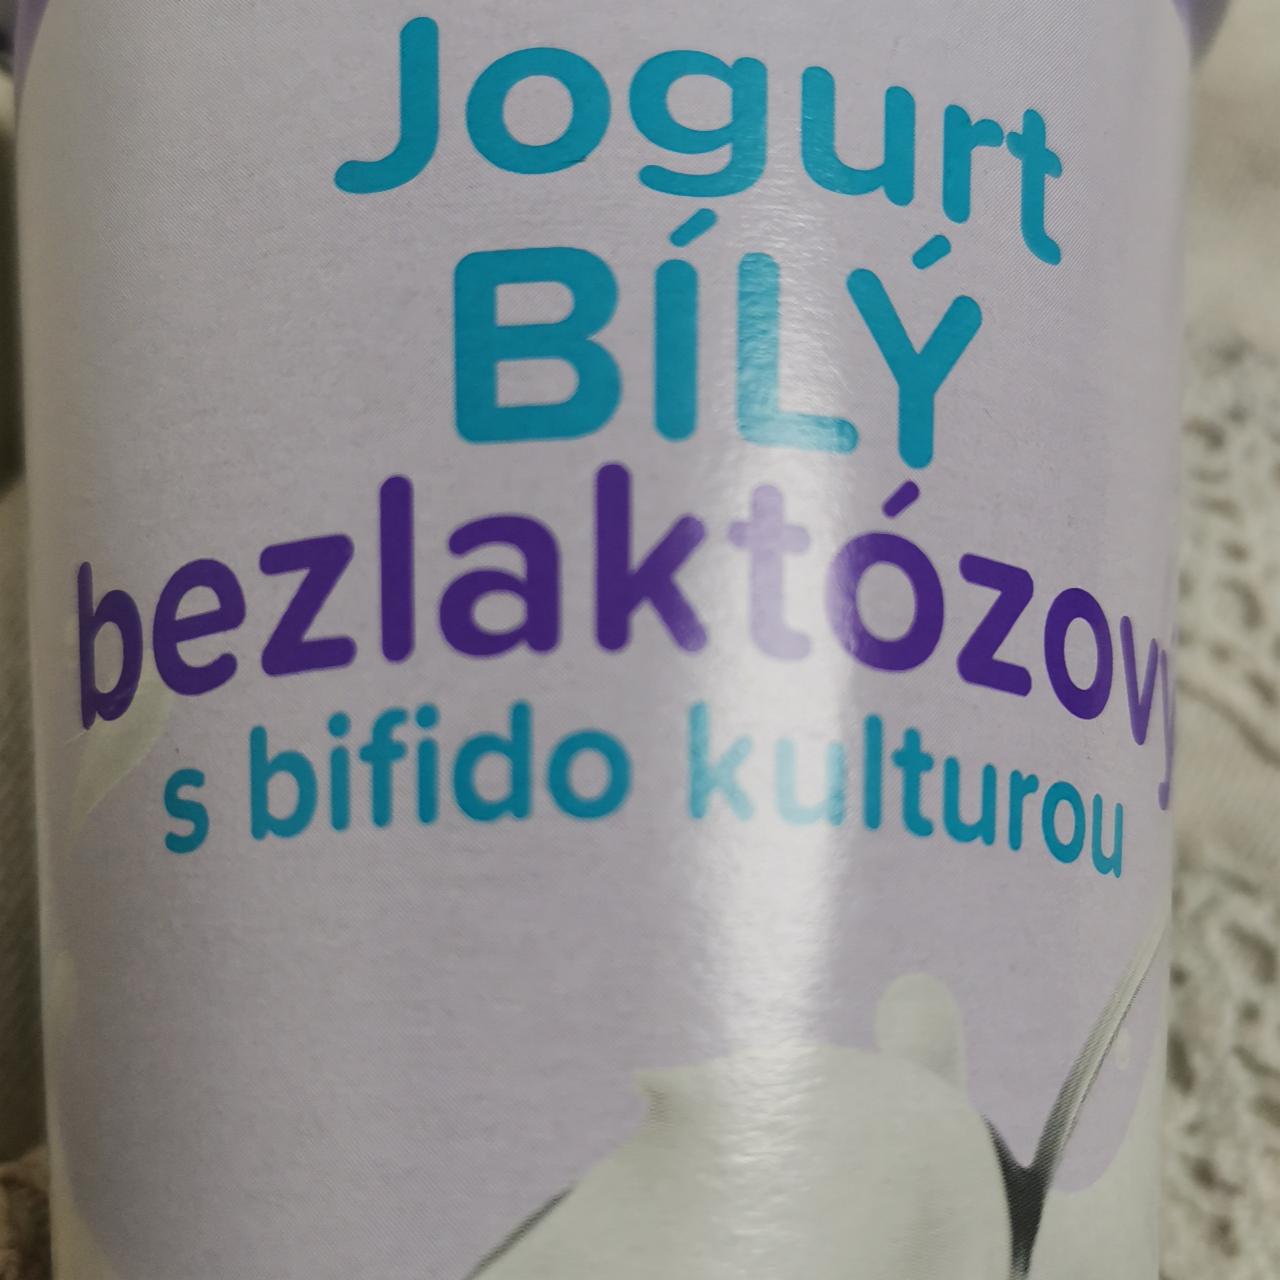 Fotografie - Jogurt bílý bezlaktózový s bifido kulturou Boni